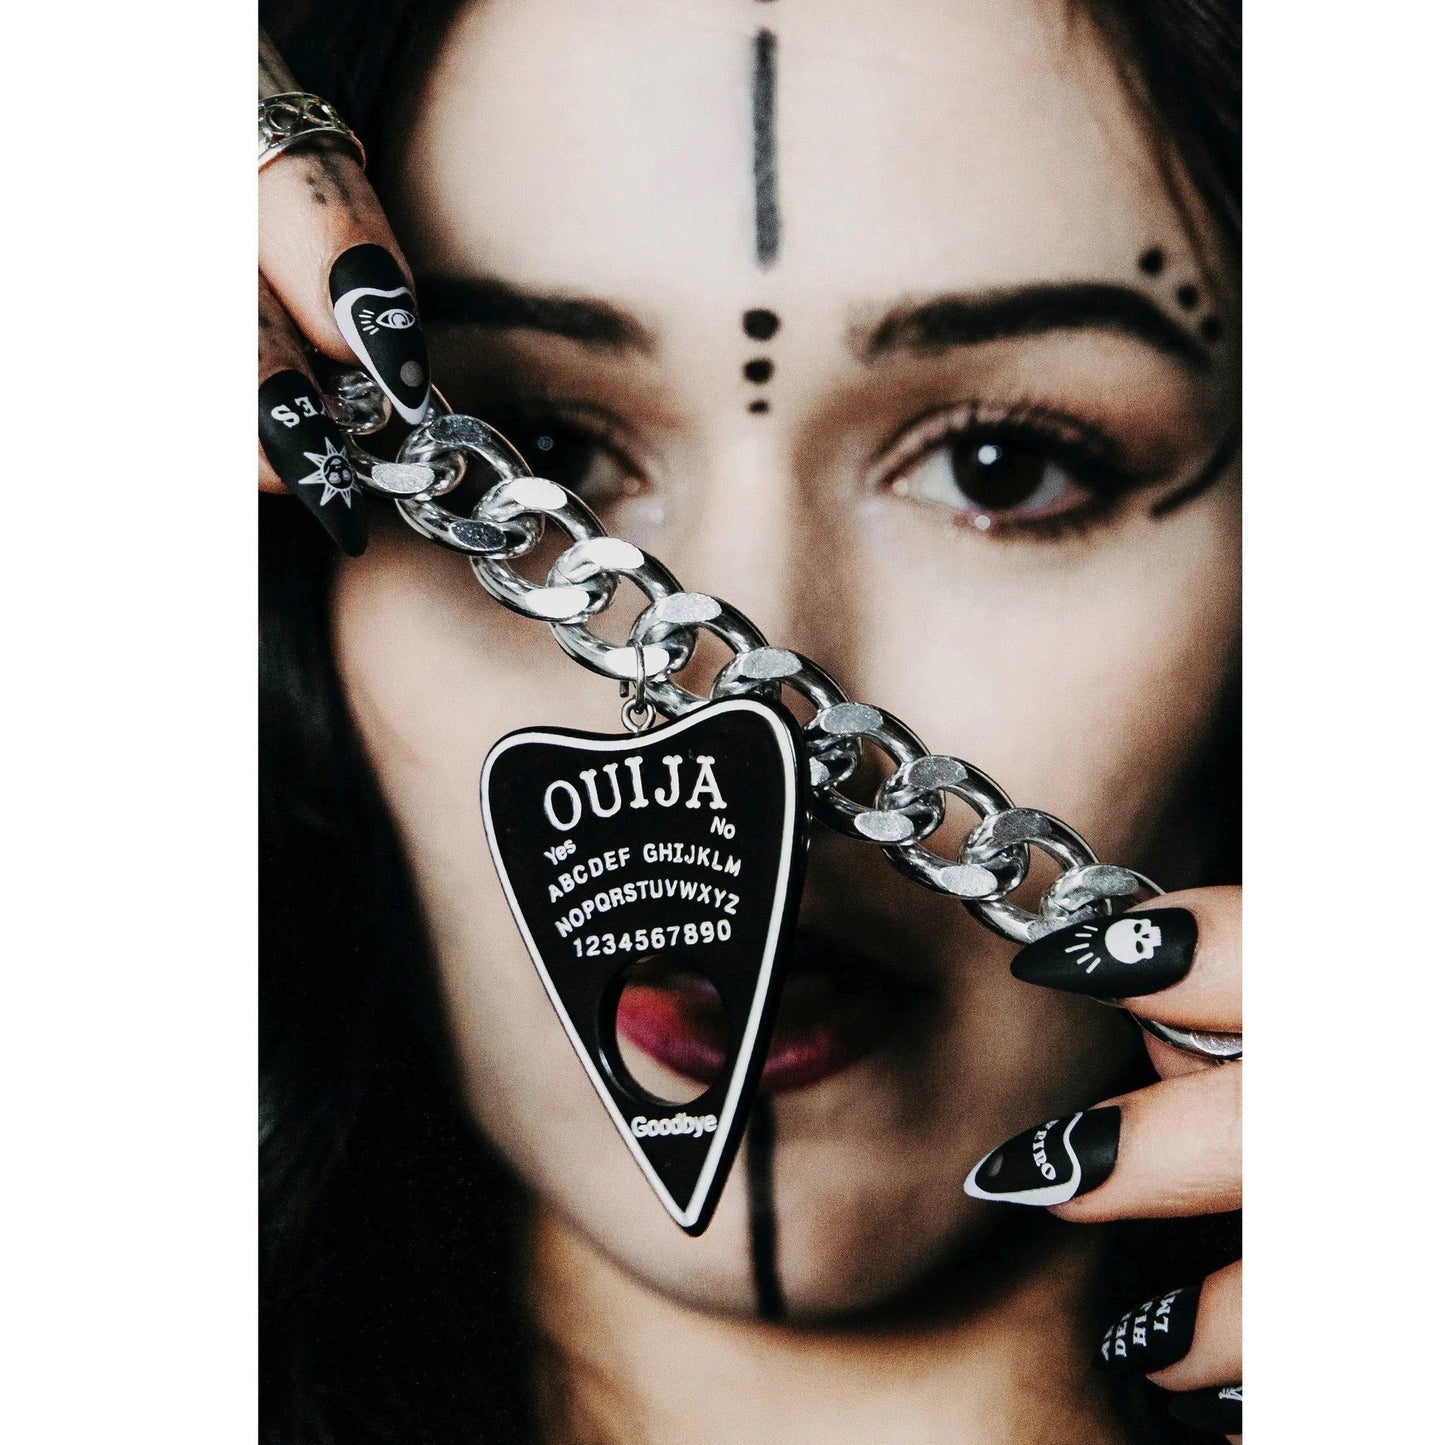 Ouija Nailz in Black | Press On Nail Kit Includes 24 Nails